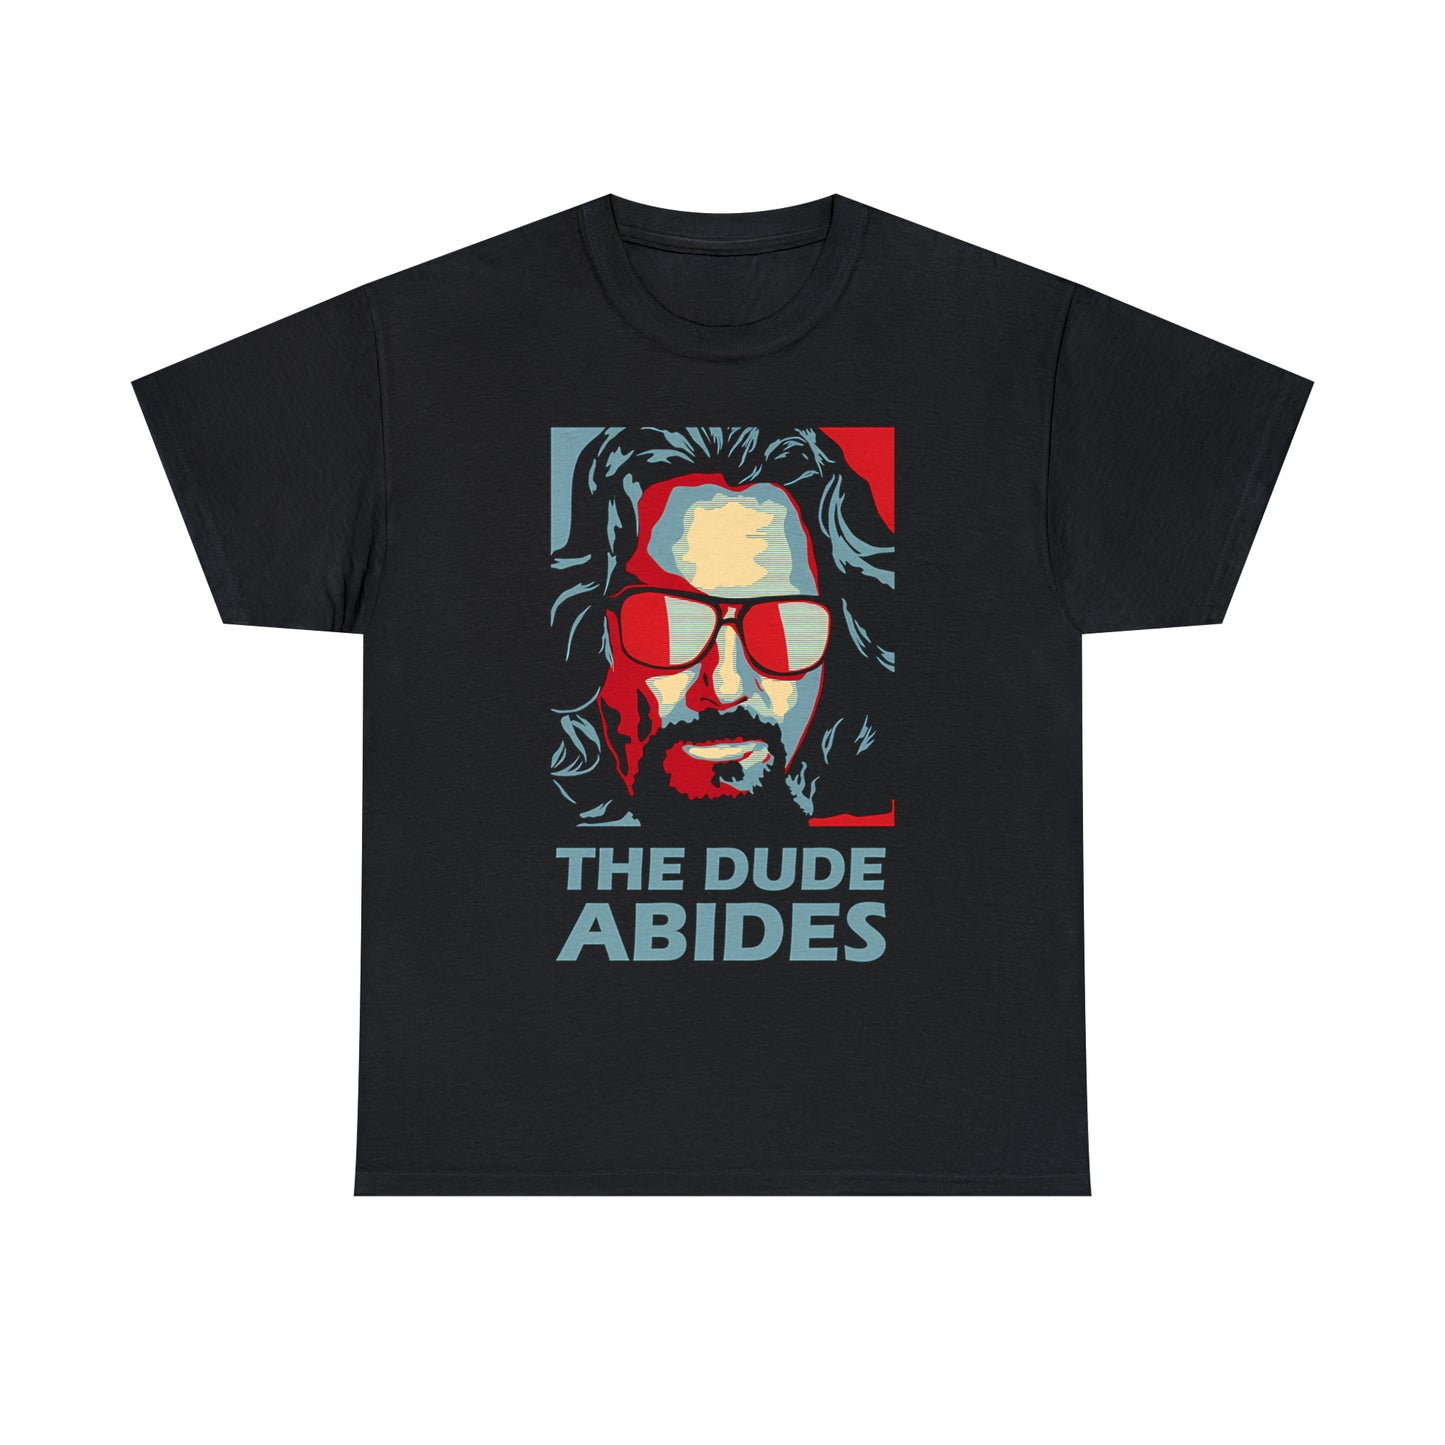 The Big Lebowski - The Dude Abides T-Shirts